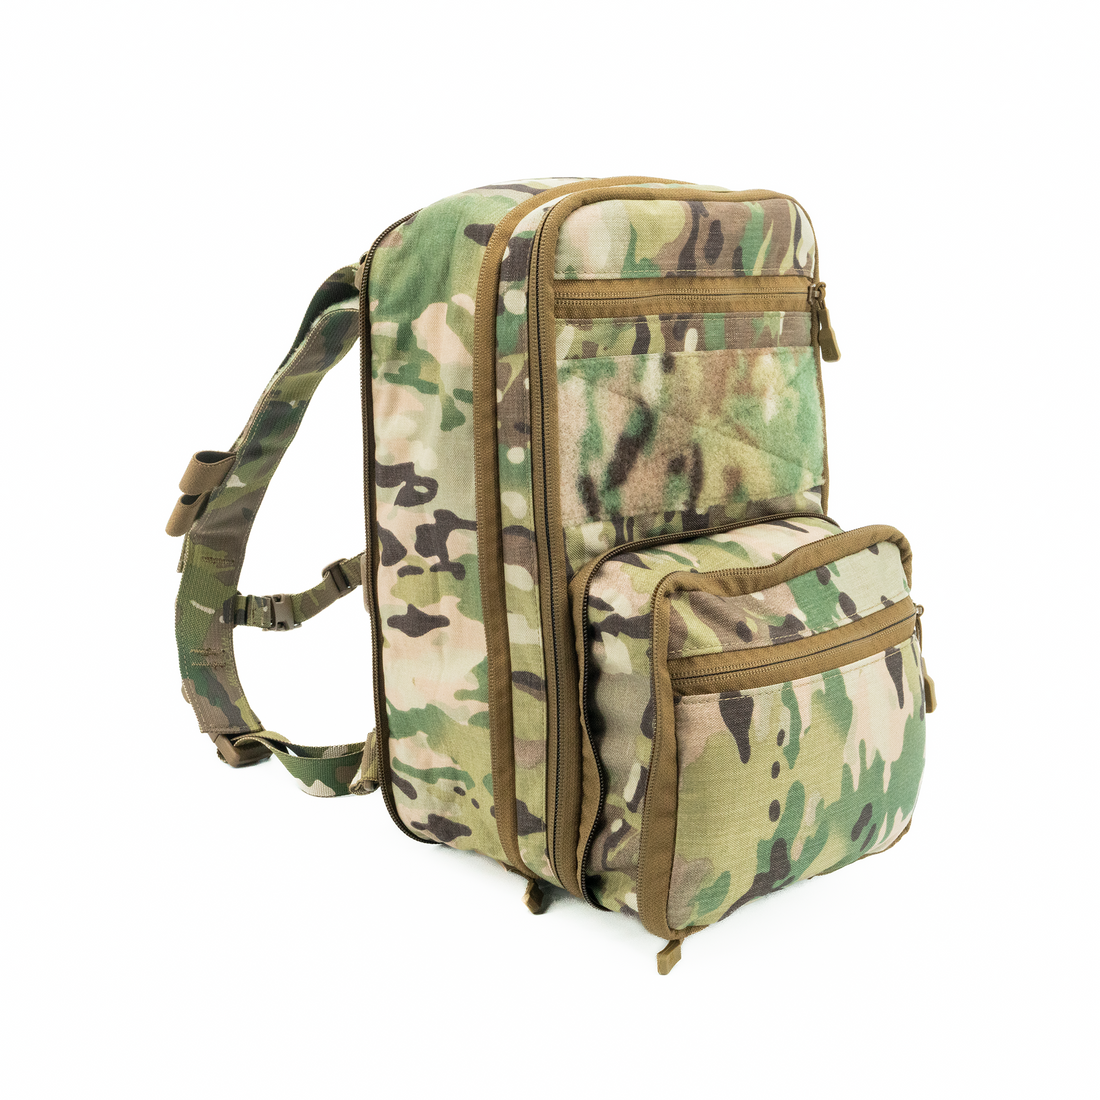 Haley Strategic D3 Flatpack 2.0 Assault Pack